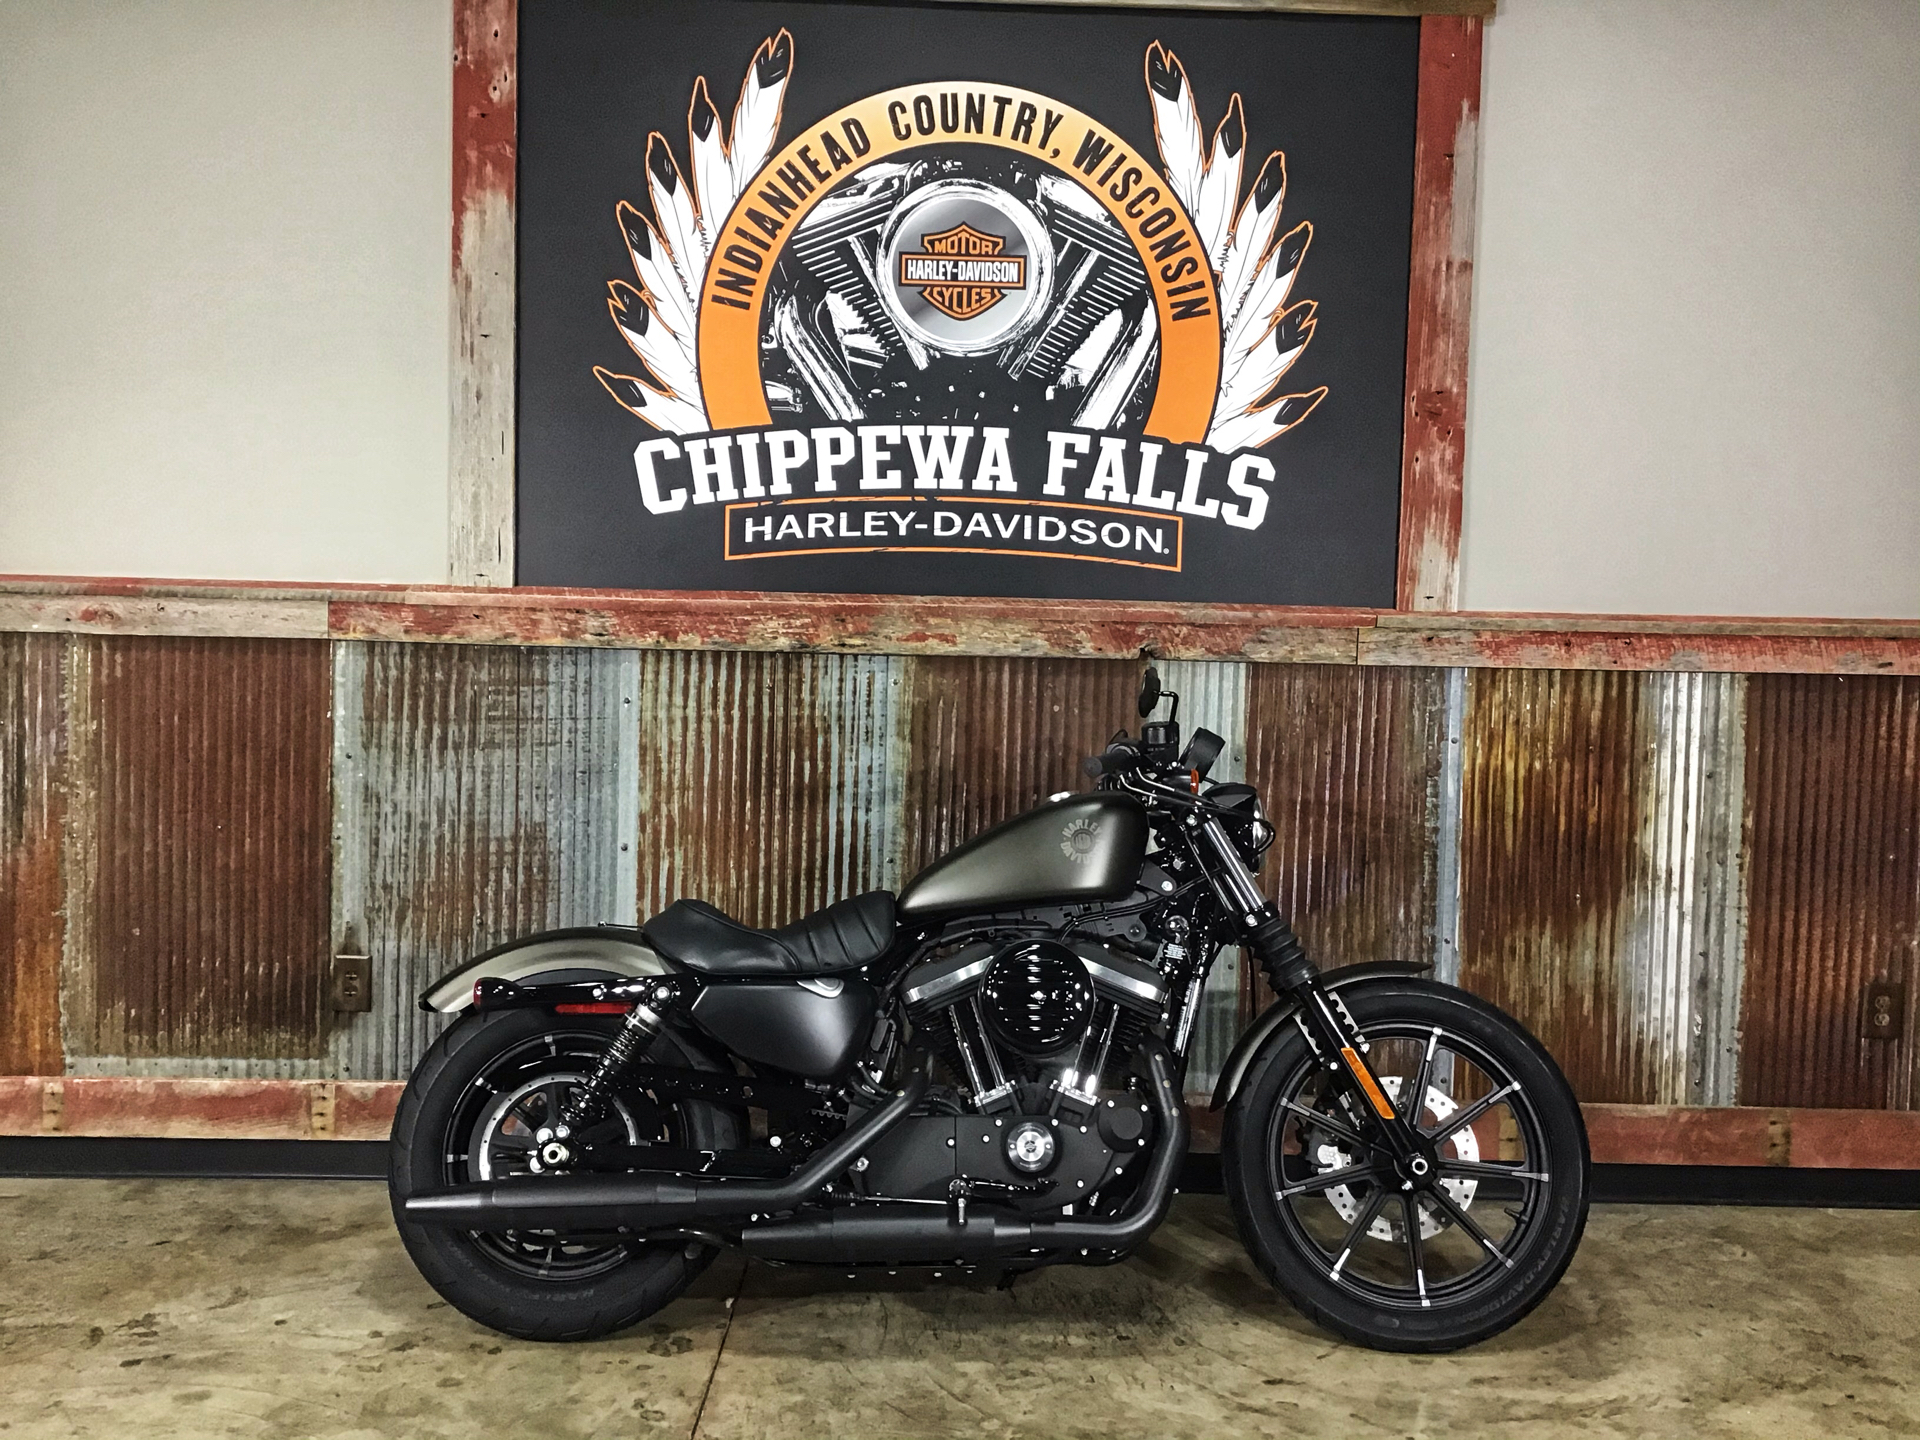 New 2021 Harley Davidson Iron 883 River Rock Gray Denim Motorcycles In Chippewa Falls Wi Xl400905